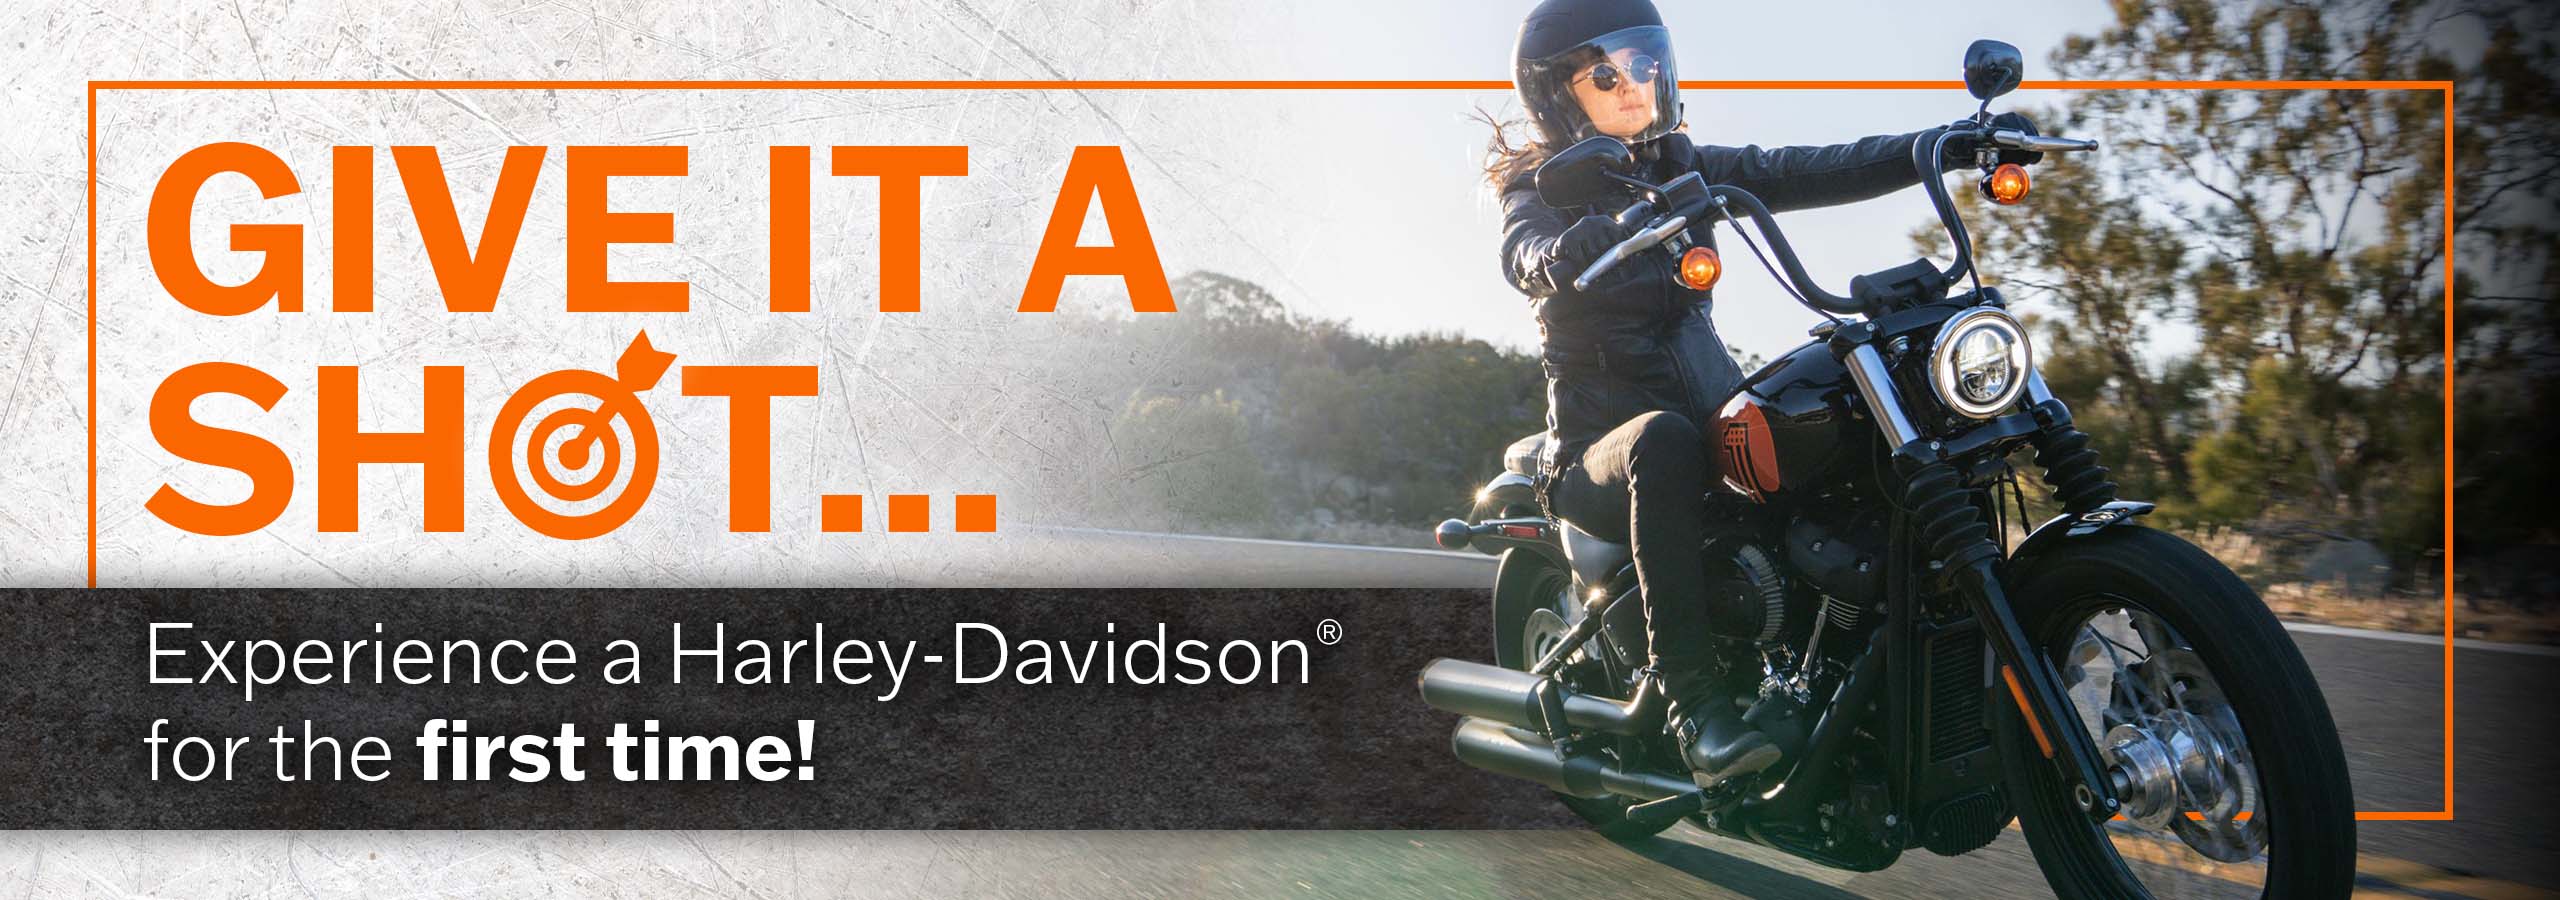 Test ride a Harley Davidson